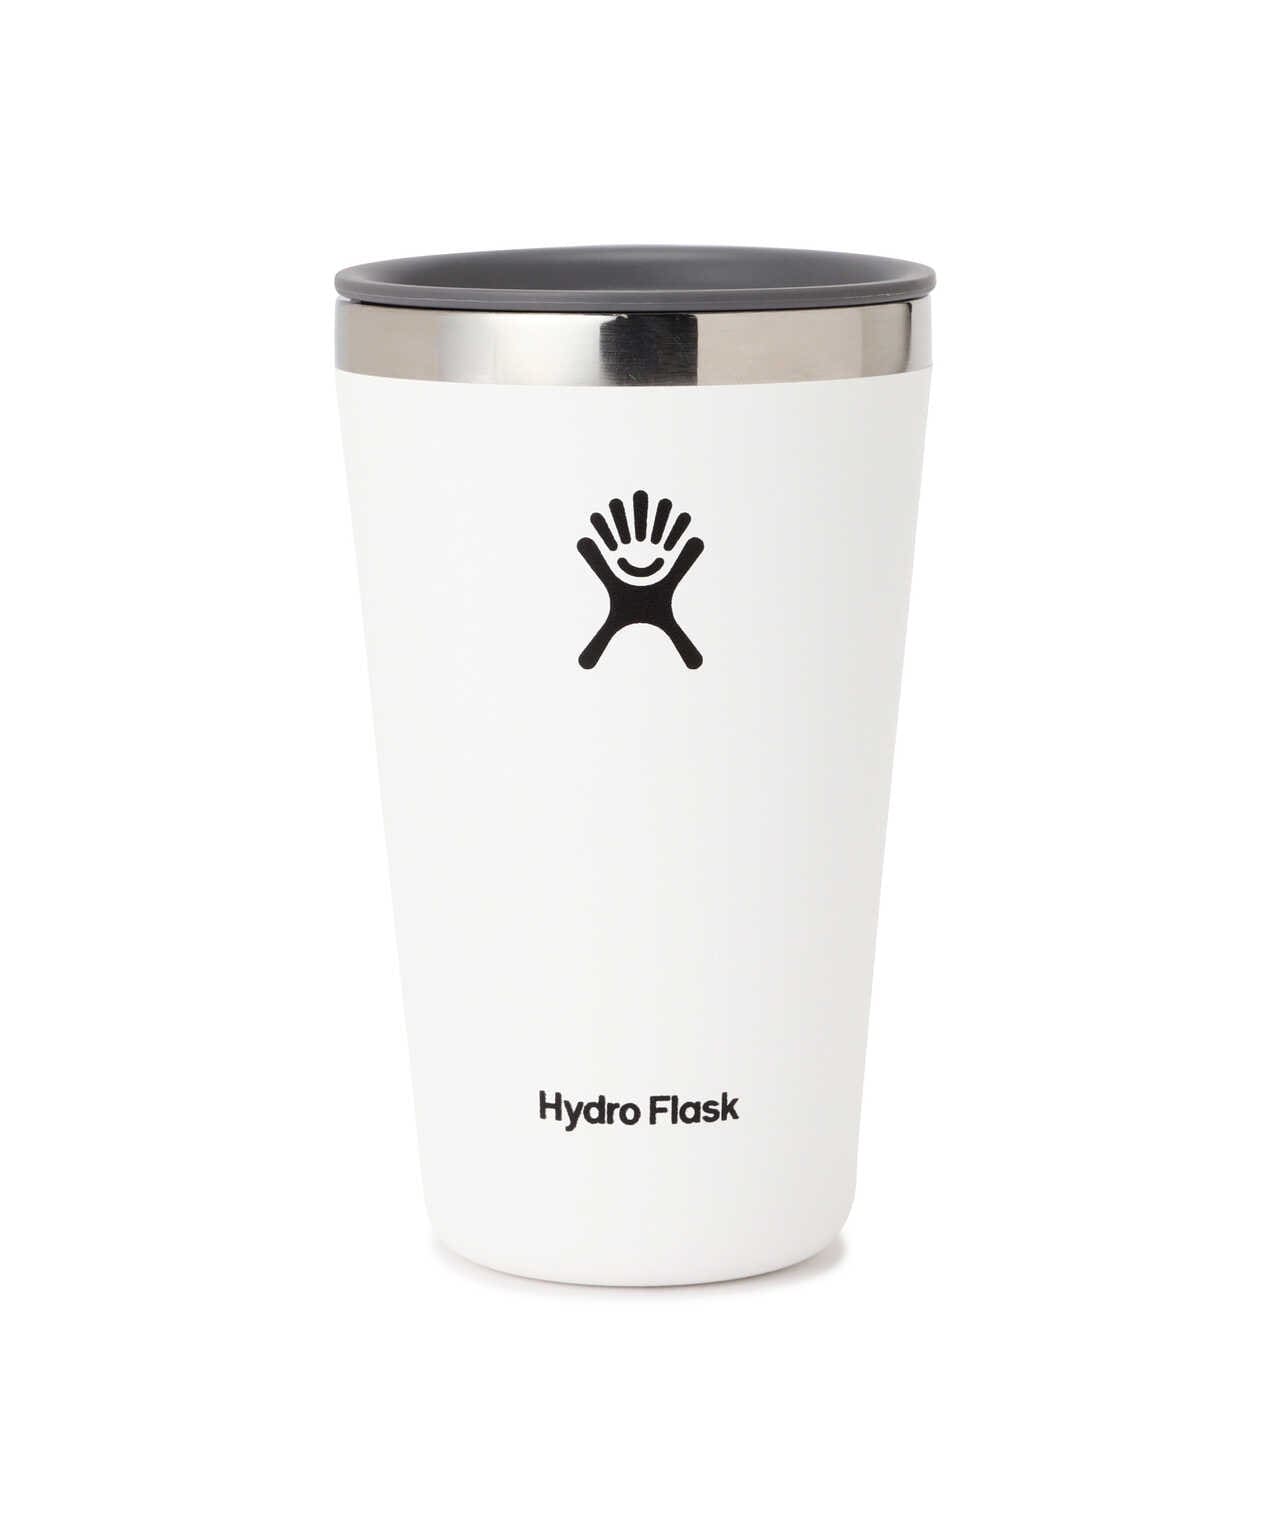 Hydro Flask/ハイドロフラスク 16 oz All Around Tumbler #890117 